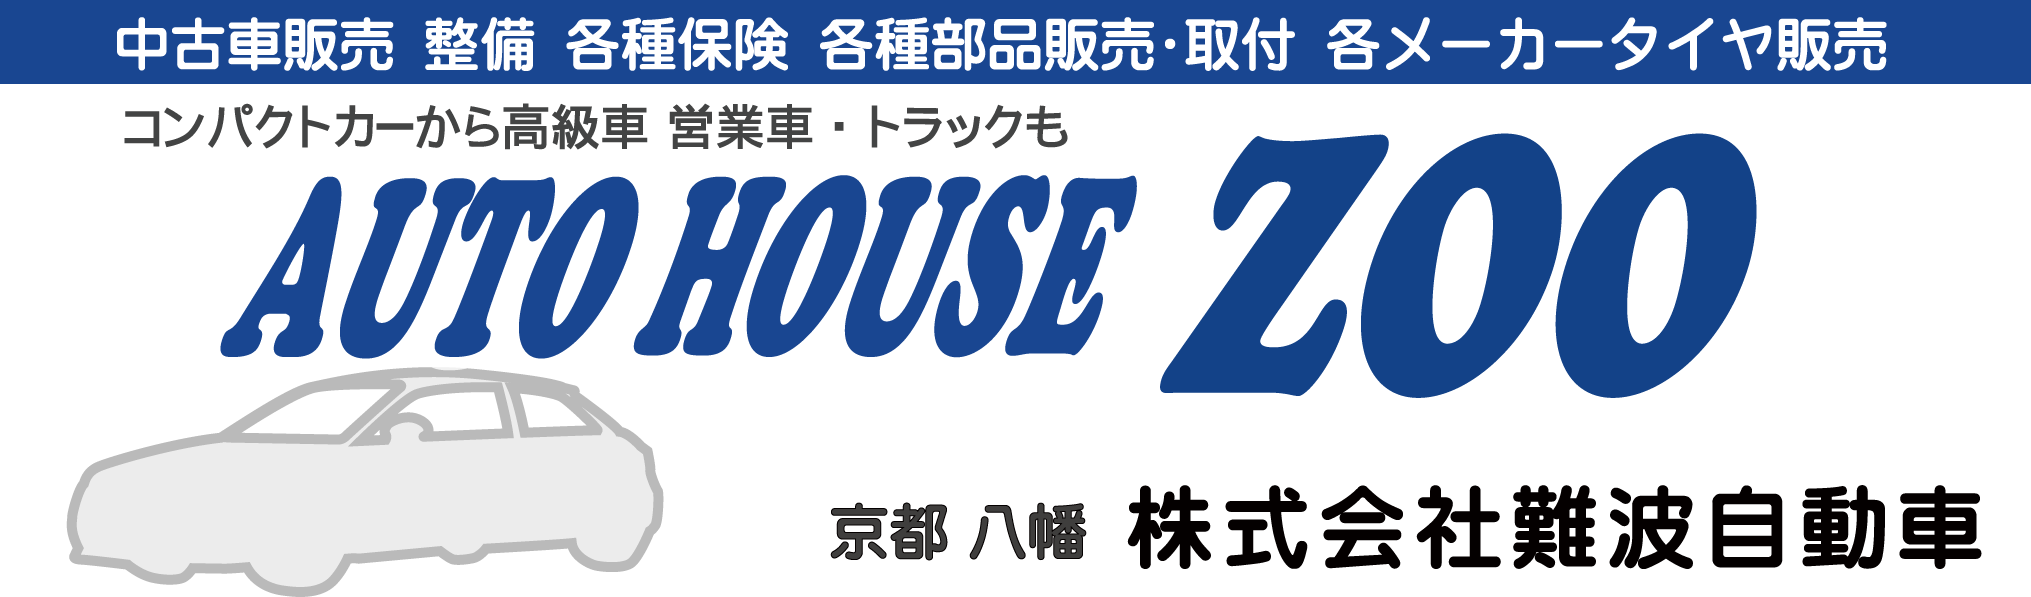 AutoHouse Zoo